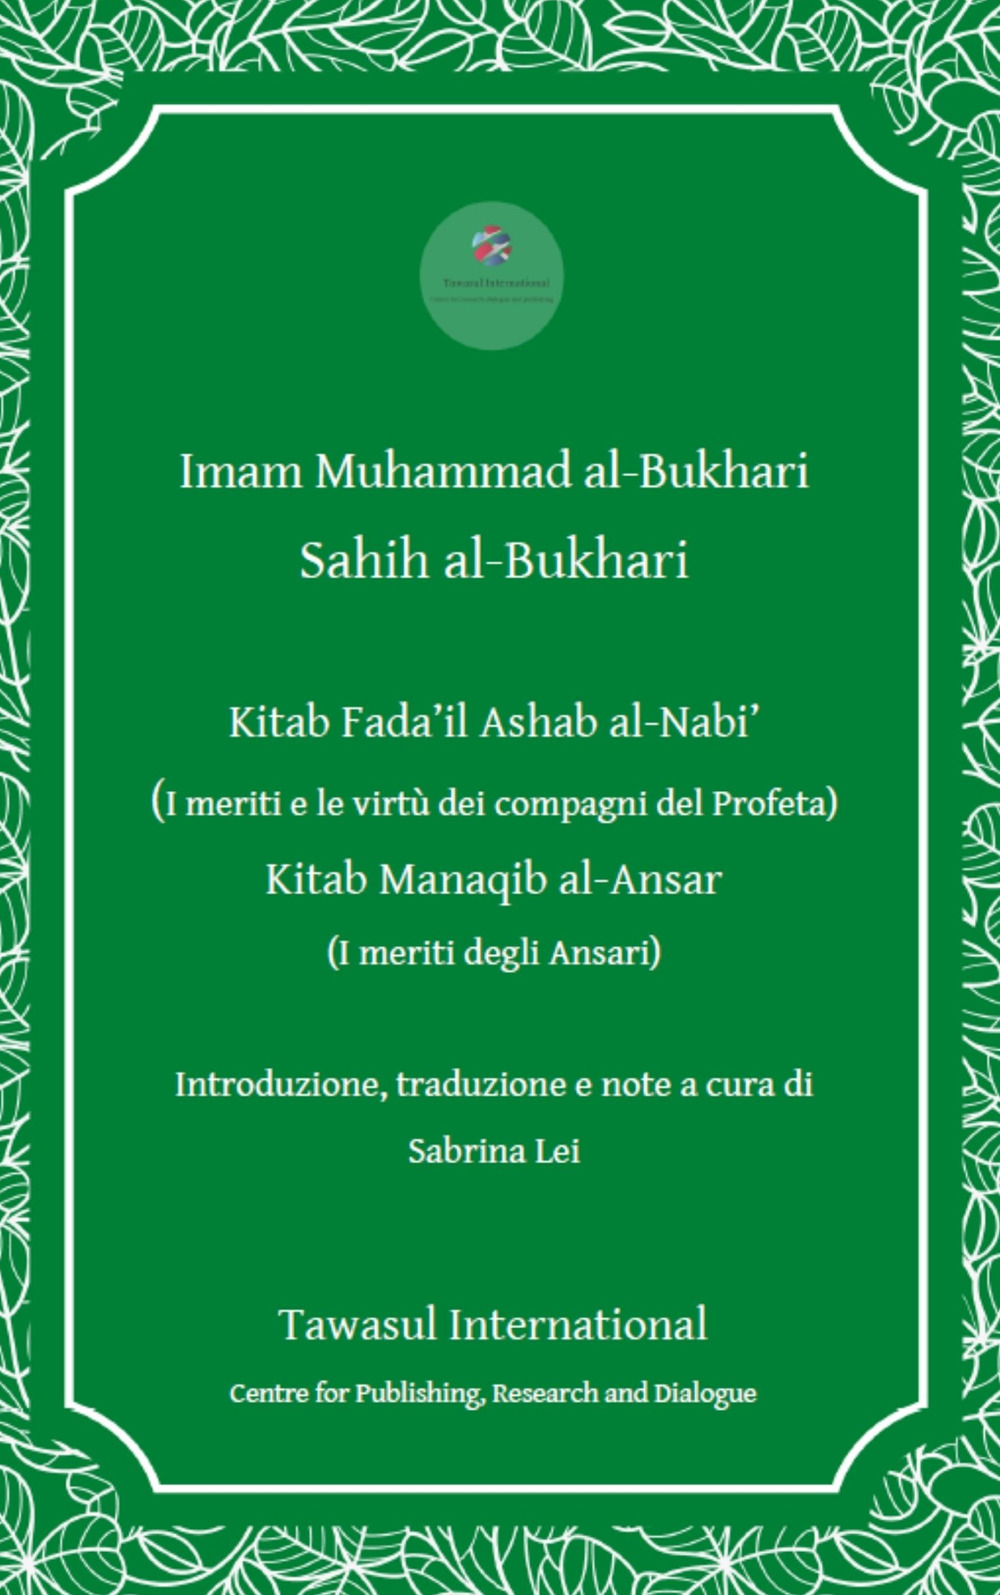 I Kitab Fada'il Ashab al -Nabi' (I meriti e le virtù dei compagni del Profeta). Kitab Manaqib al -Ansar (I meriti degli Ansari)